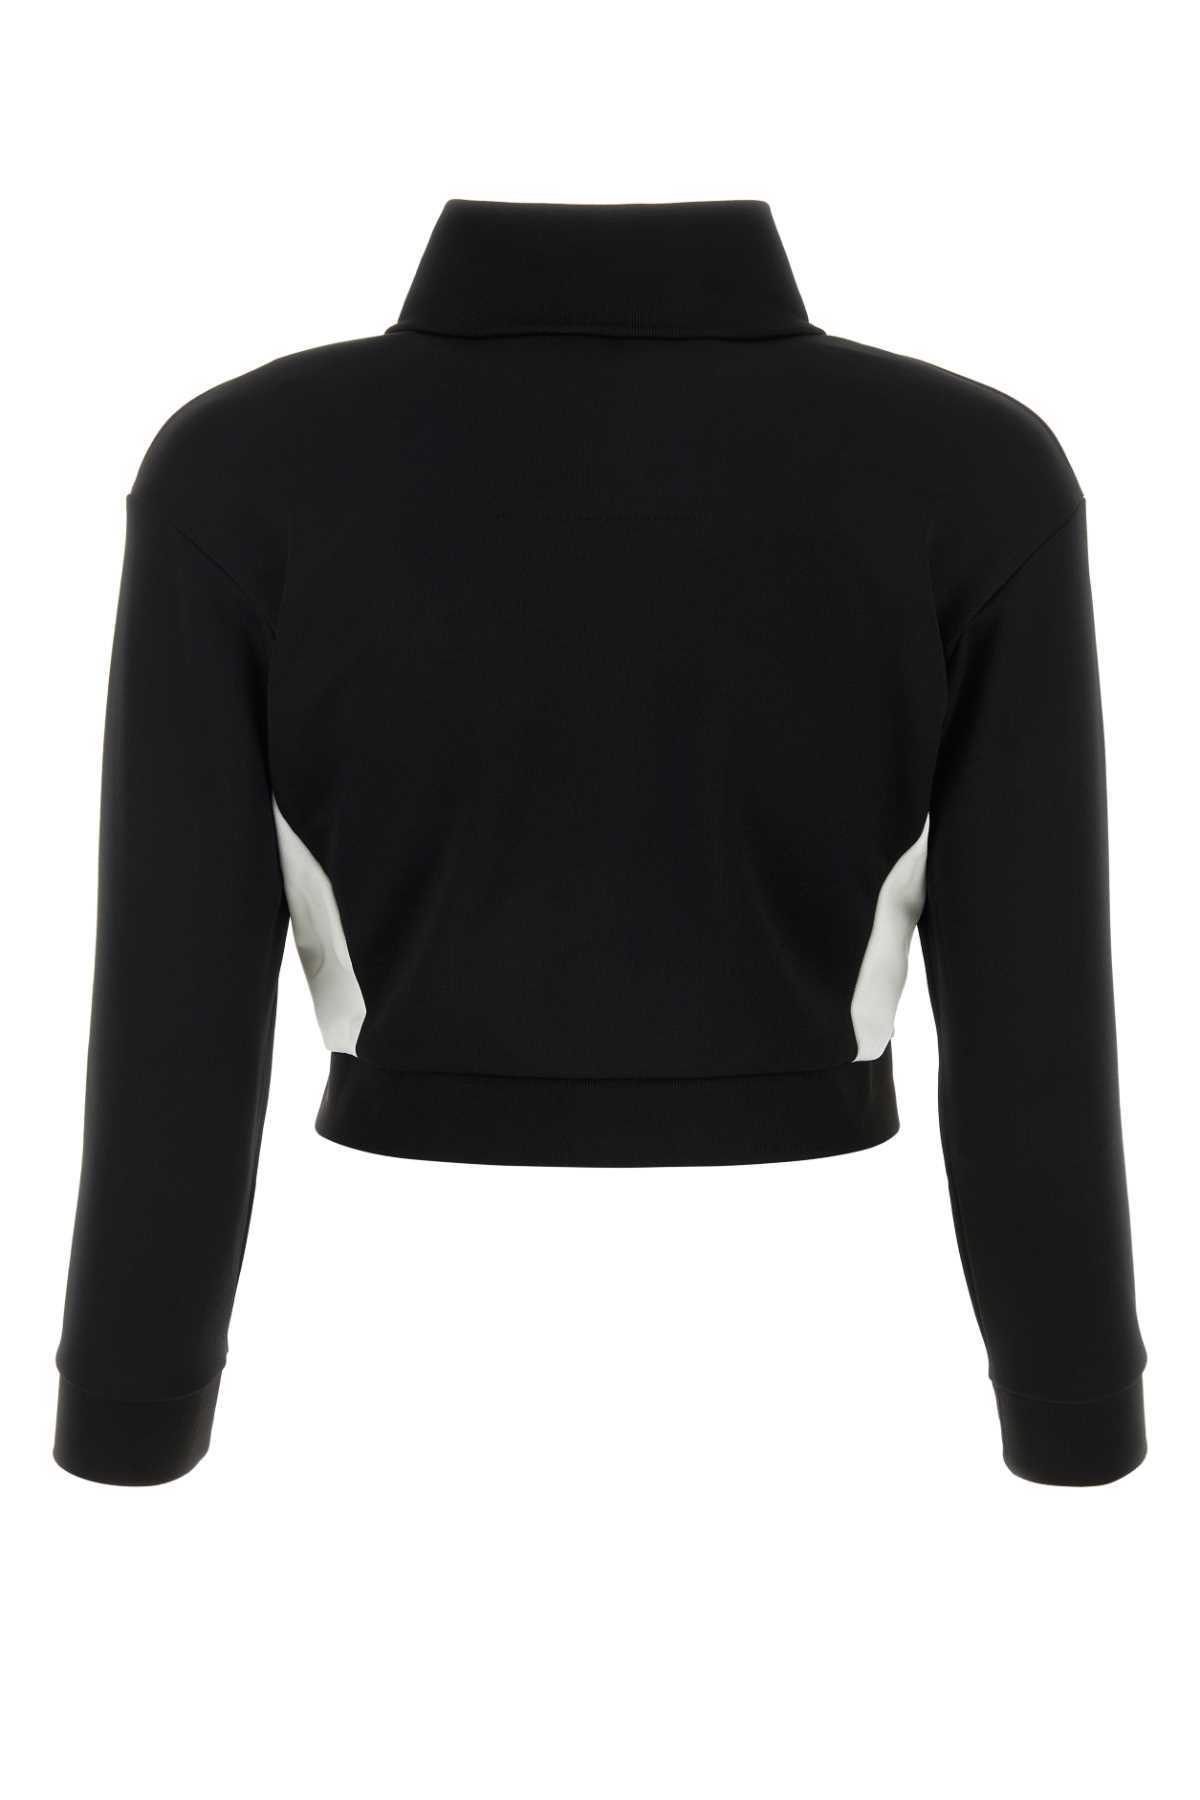 Givenchy Black Polyester Blend Sweatshirt In Black/white